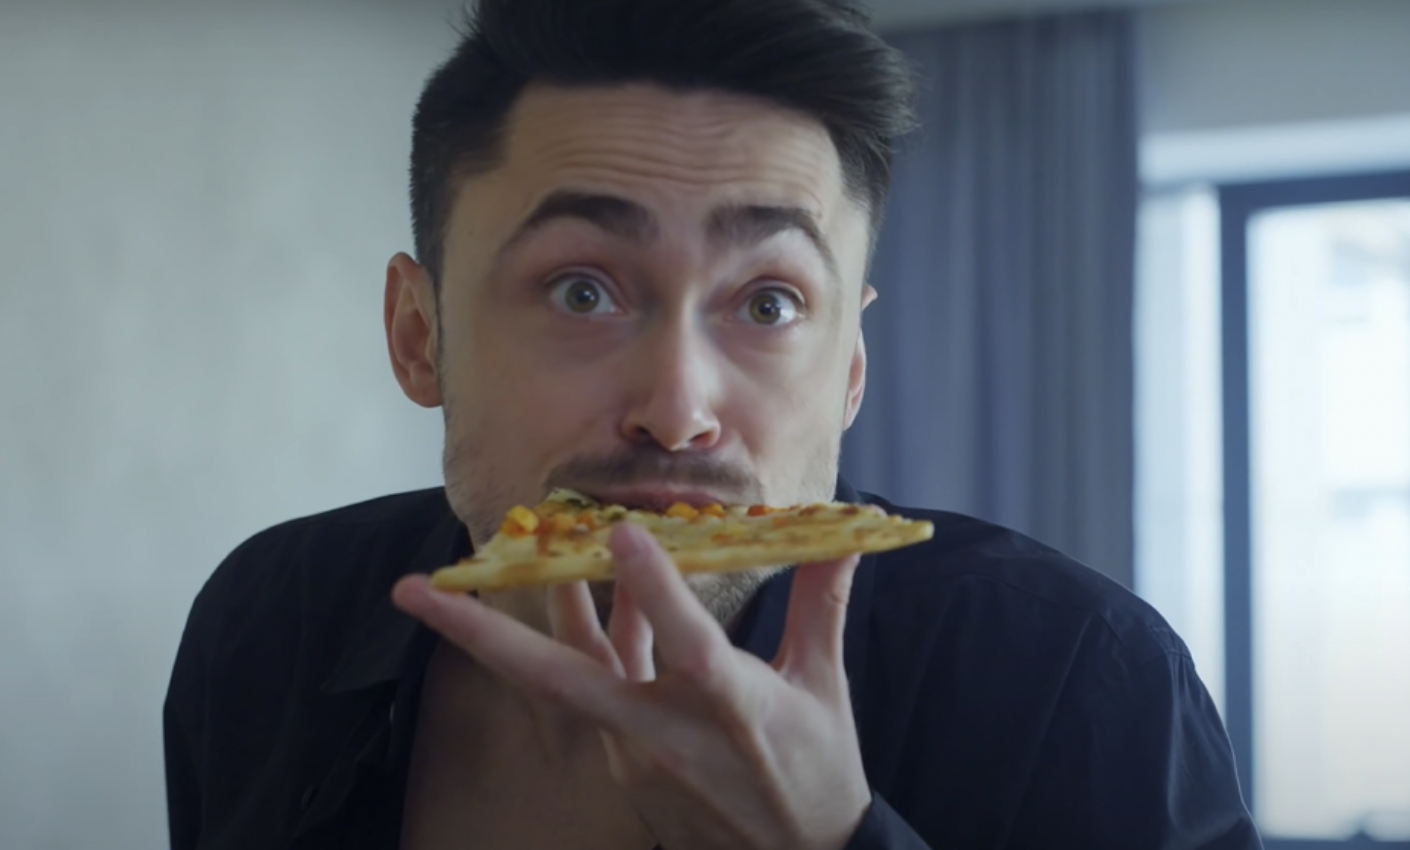 Homme mangeant une pizza | Source : YouTube / DramatizeMe